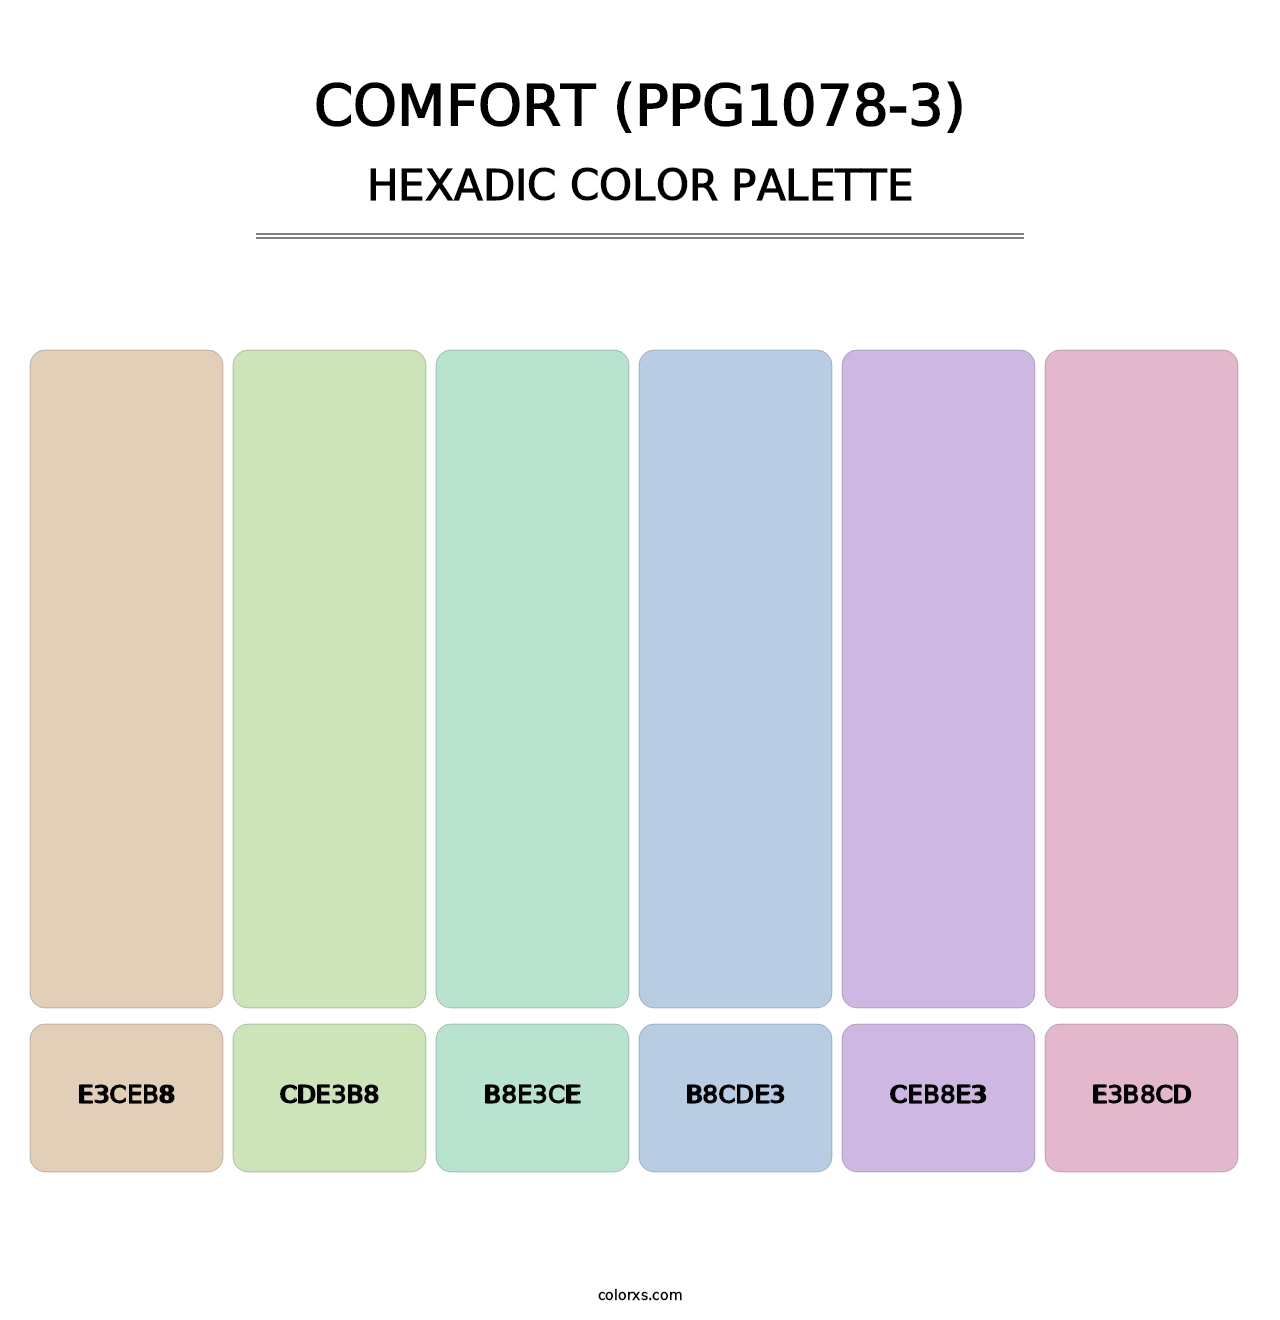 Comfort (PPG1078-3) - Hexadic Color Palette